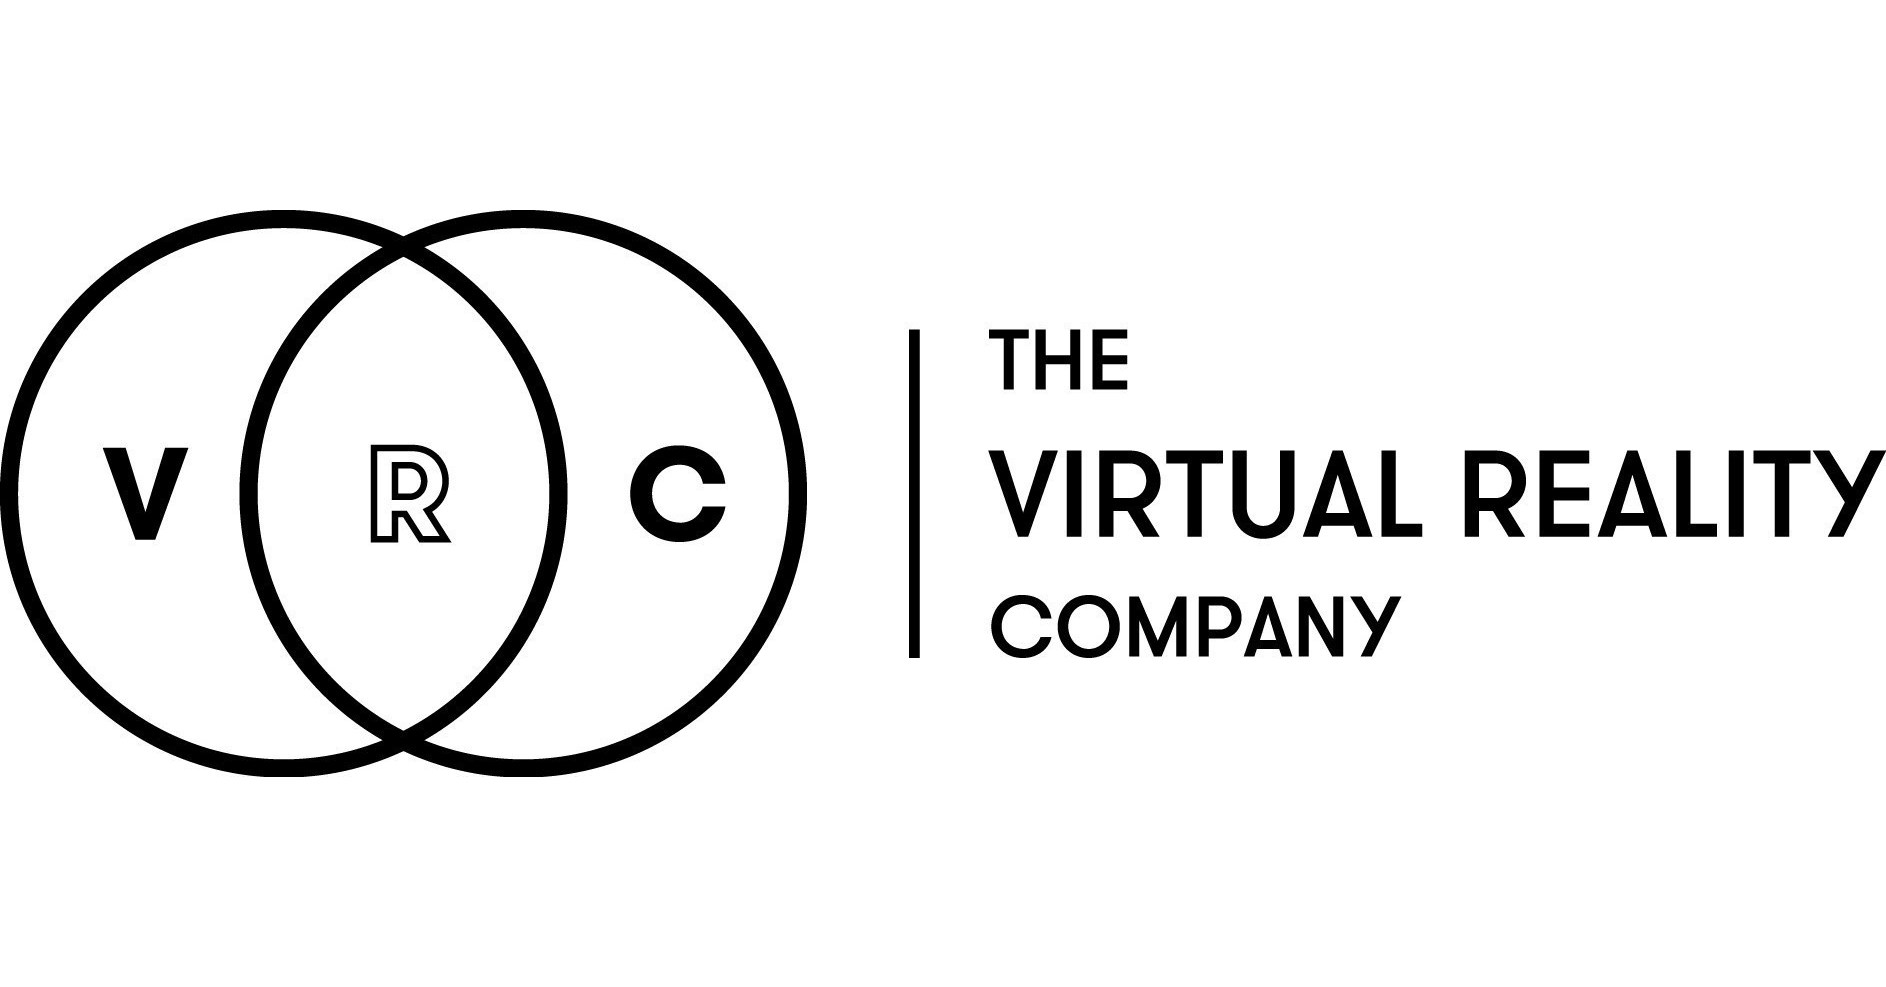 The Virtual Reality Company Leads Augmented Reality "Follow Me Dragon"